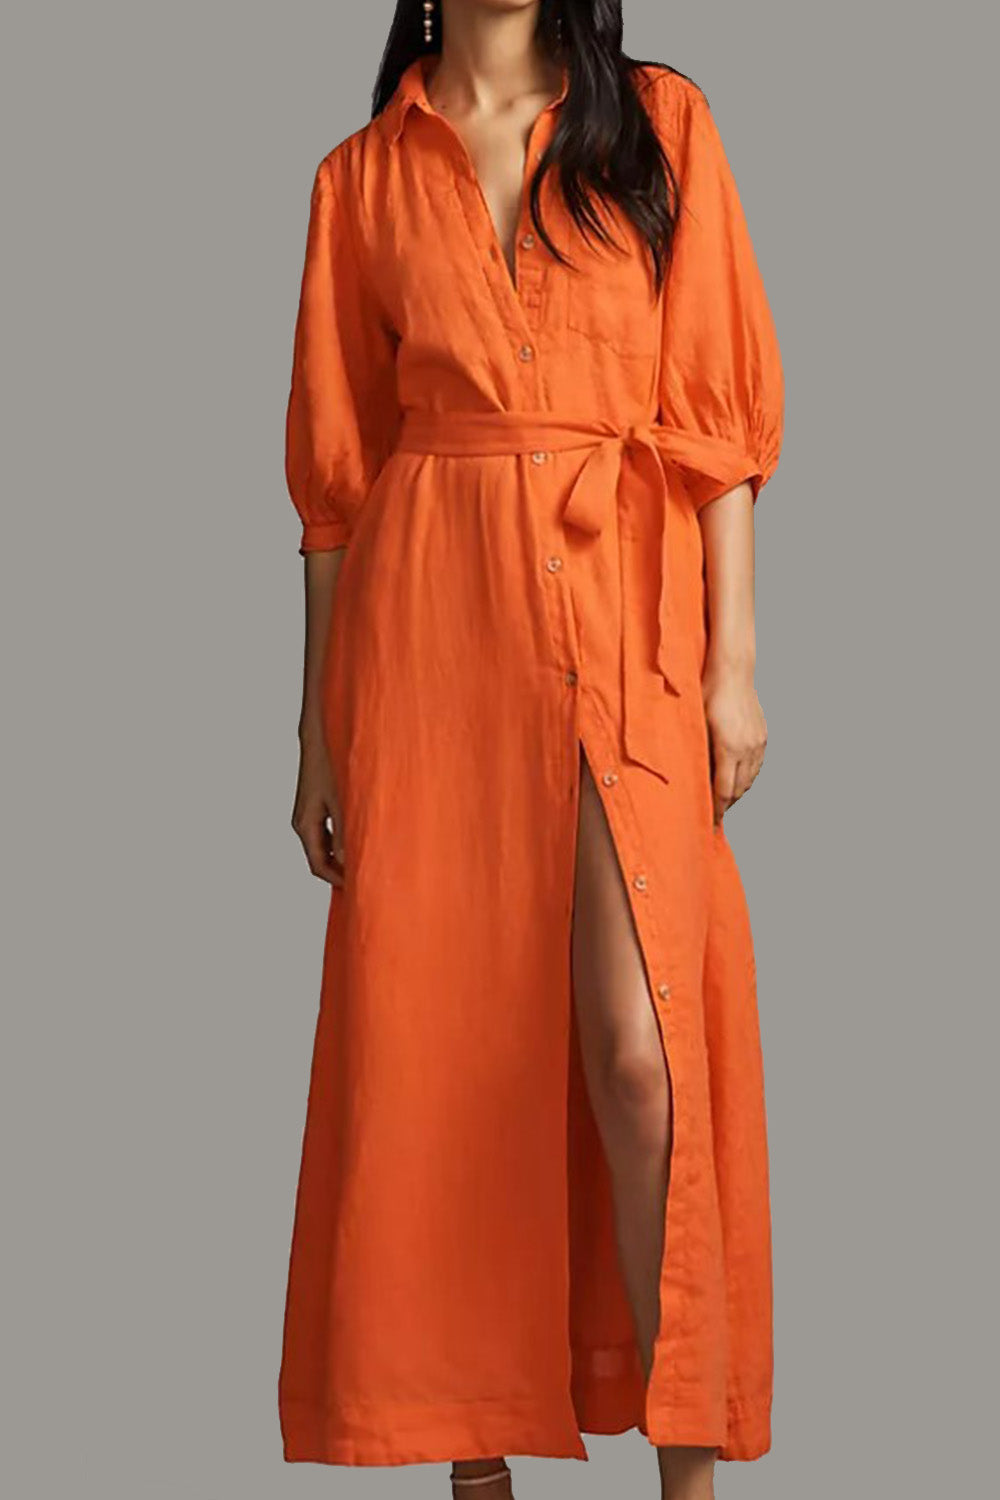 Dulcet Orange Dress